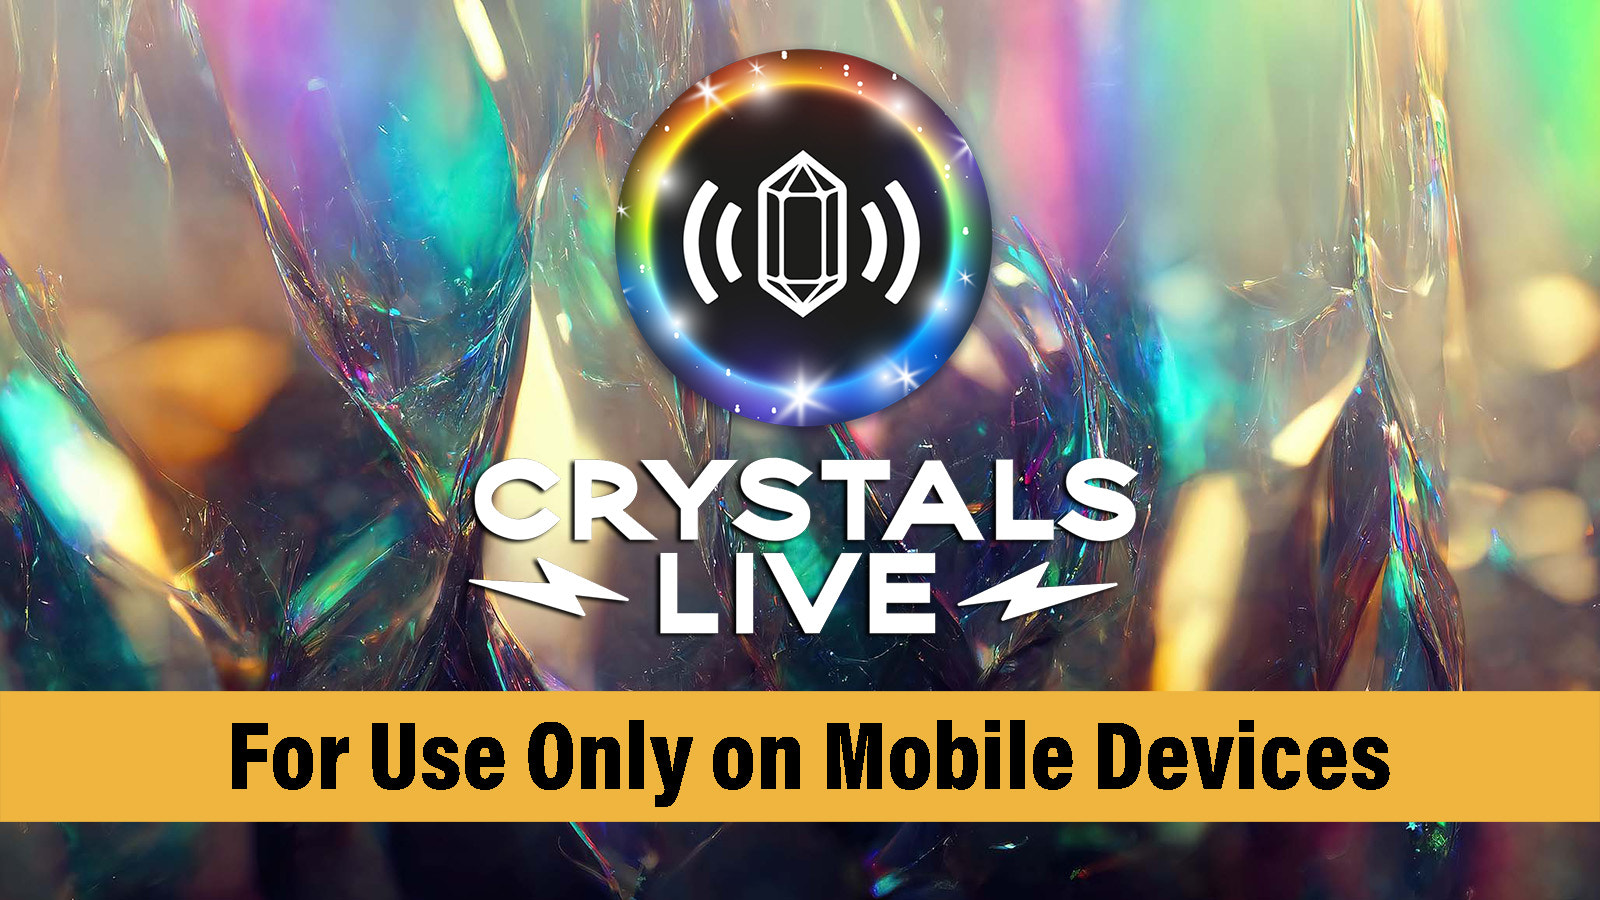 Crystals Live是一个只能在移动设备上使用的应用